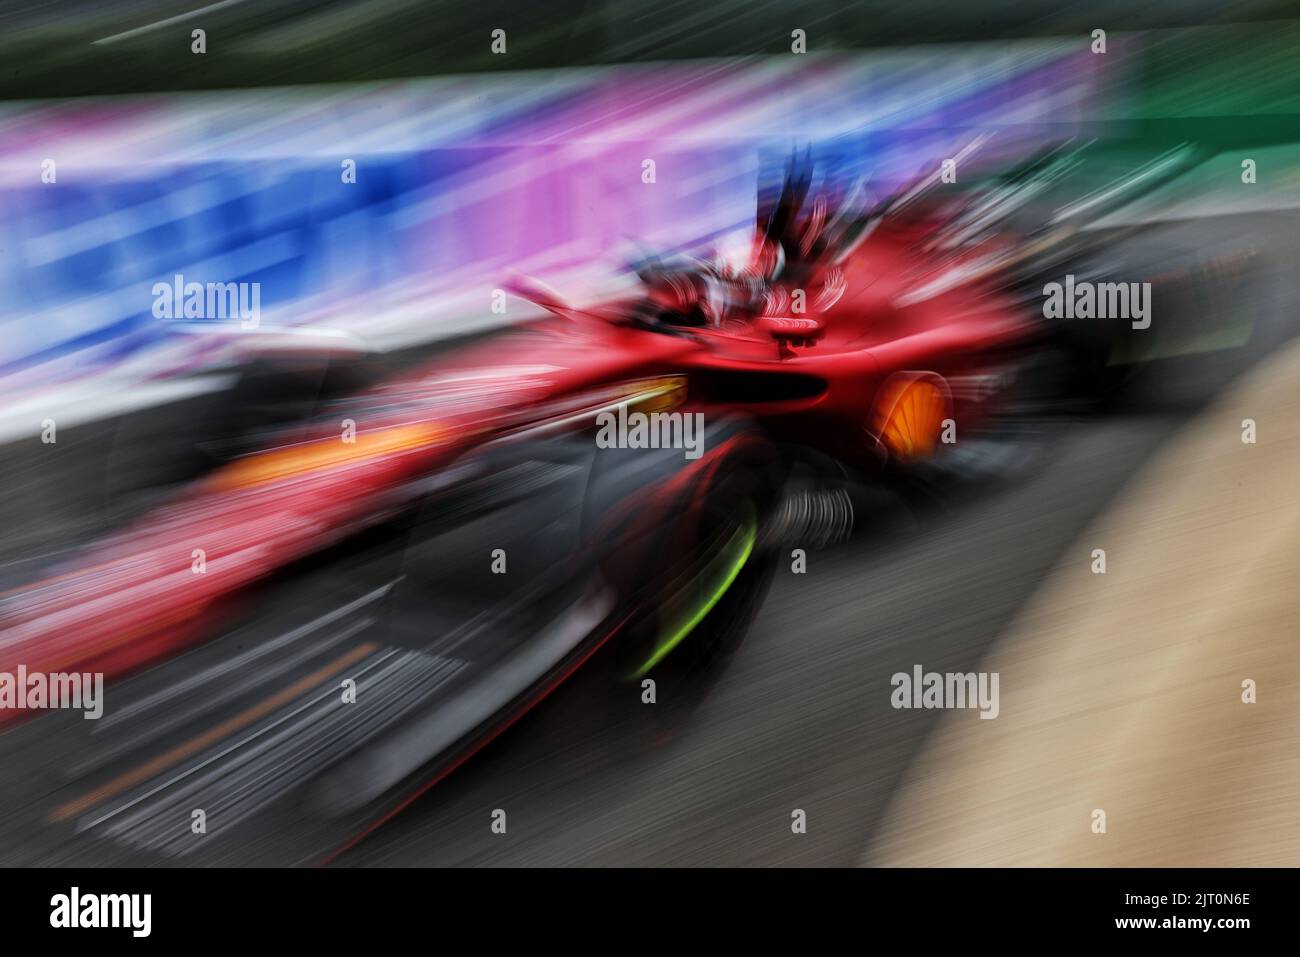 Charles Leclerc (MON) Ferrari F1-75. Belgian Grand Prix, Saturday 27th August 2022. Spa-Francorchamps, Belgium. Stock Photo